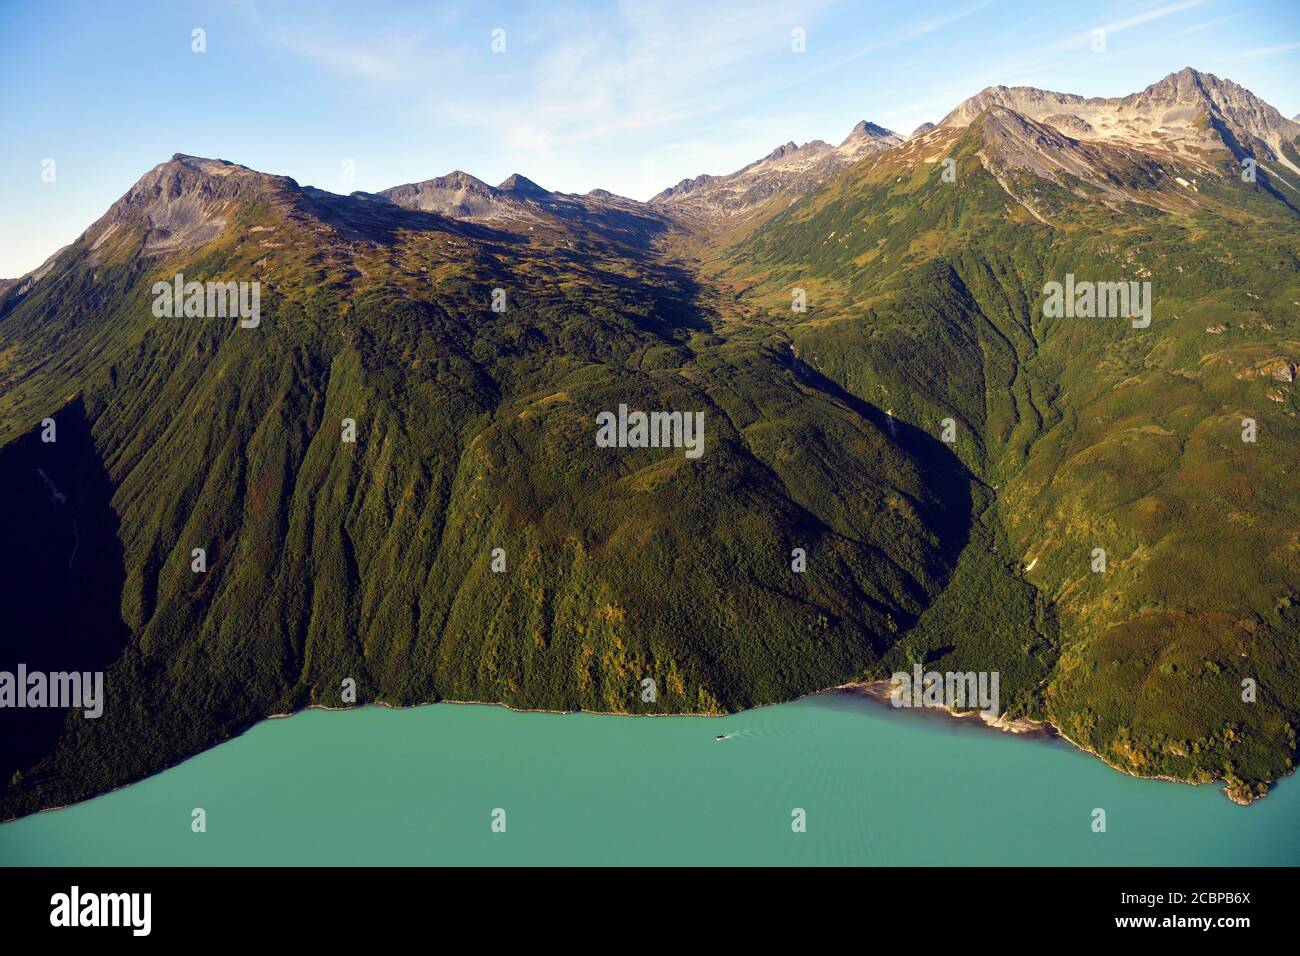 Ripide montagne boscose e un lago verde smeraldo, Lake Clark National Park, Alaska, USA Foto Stock